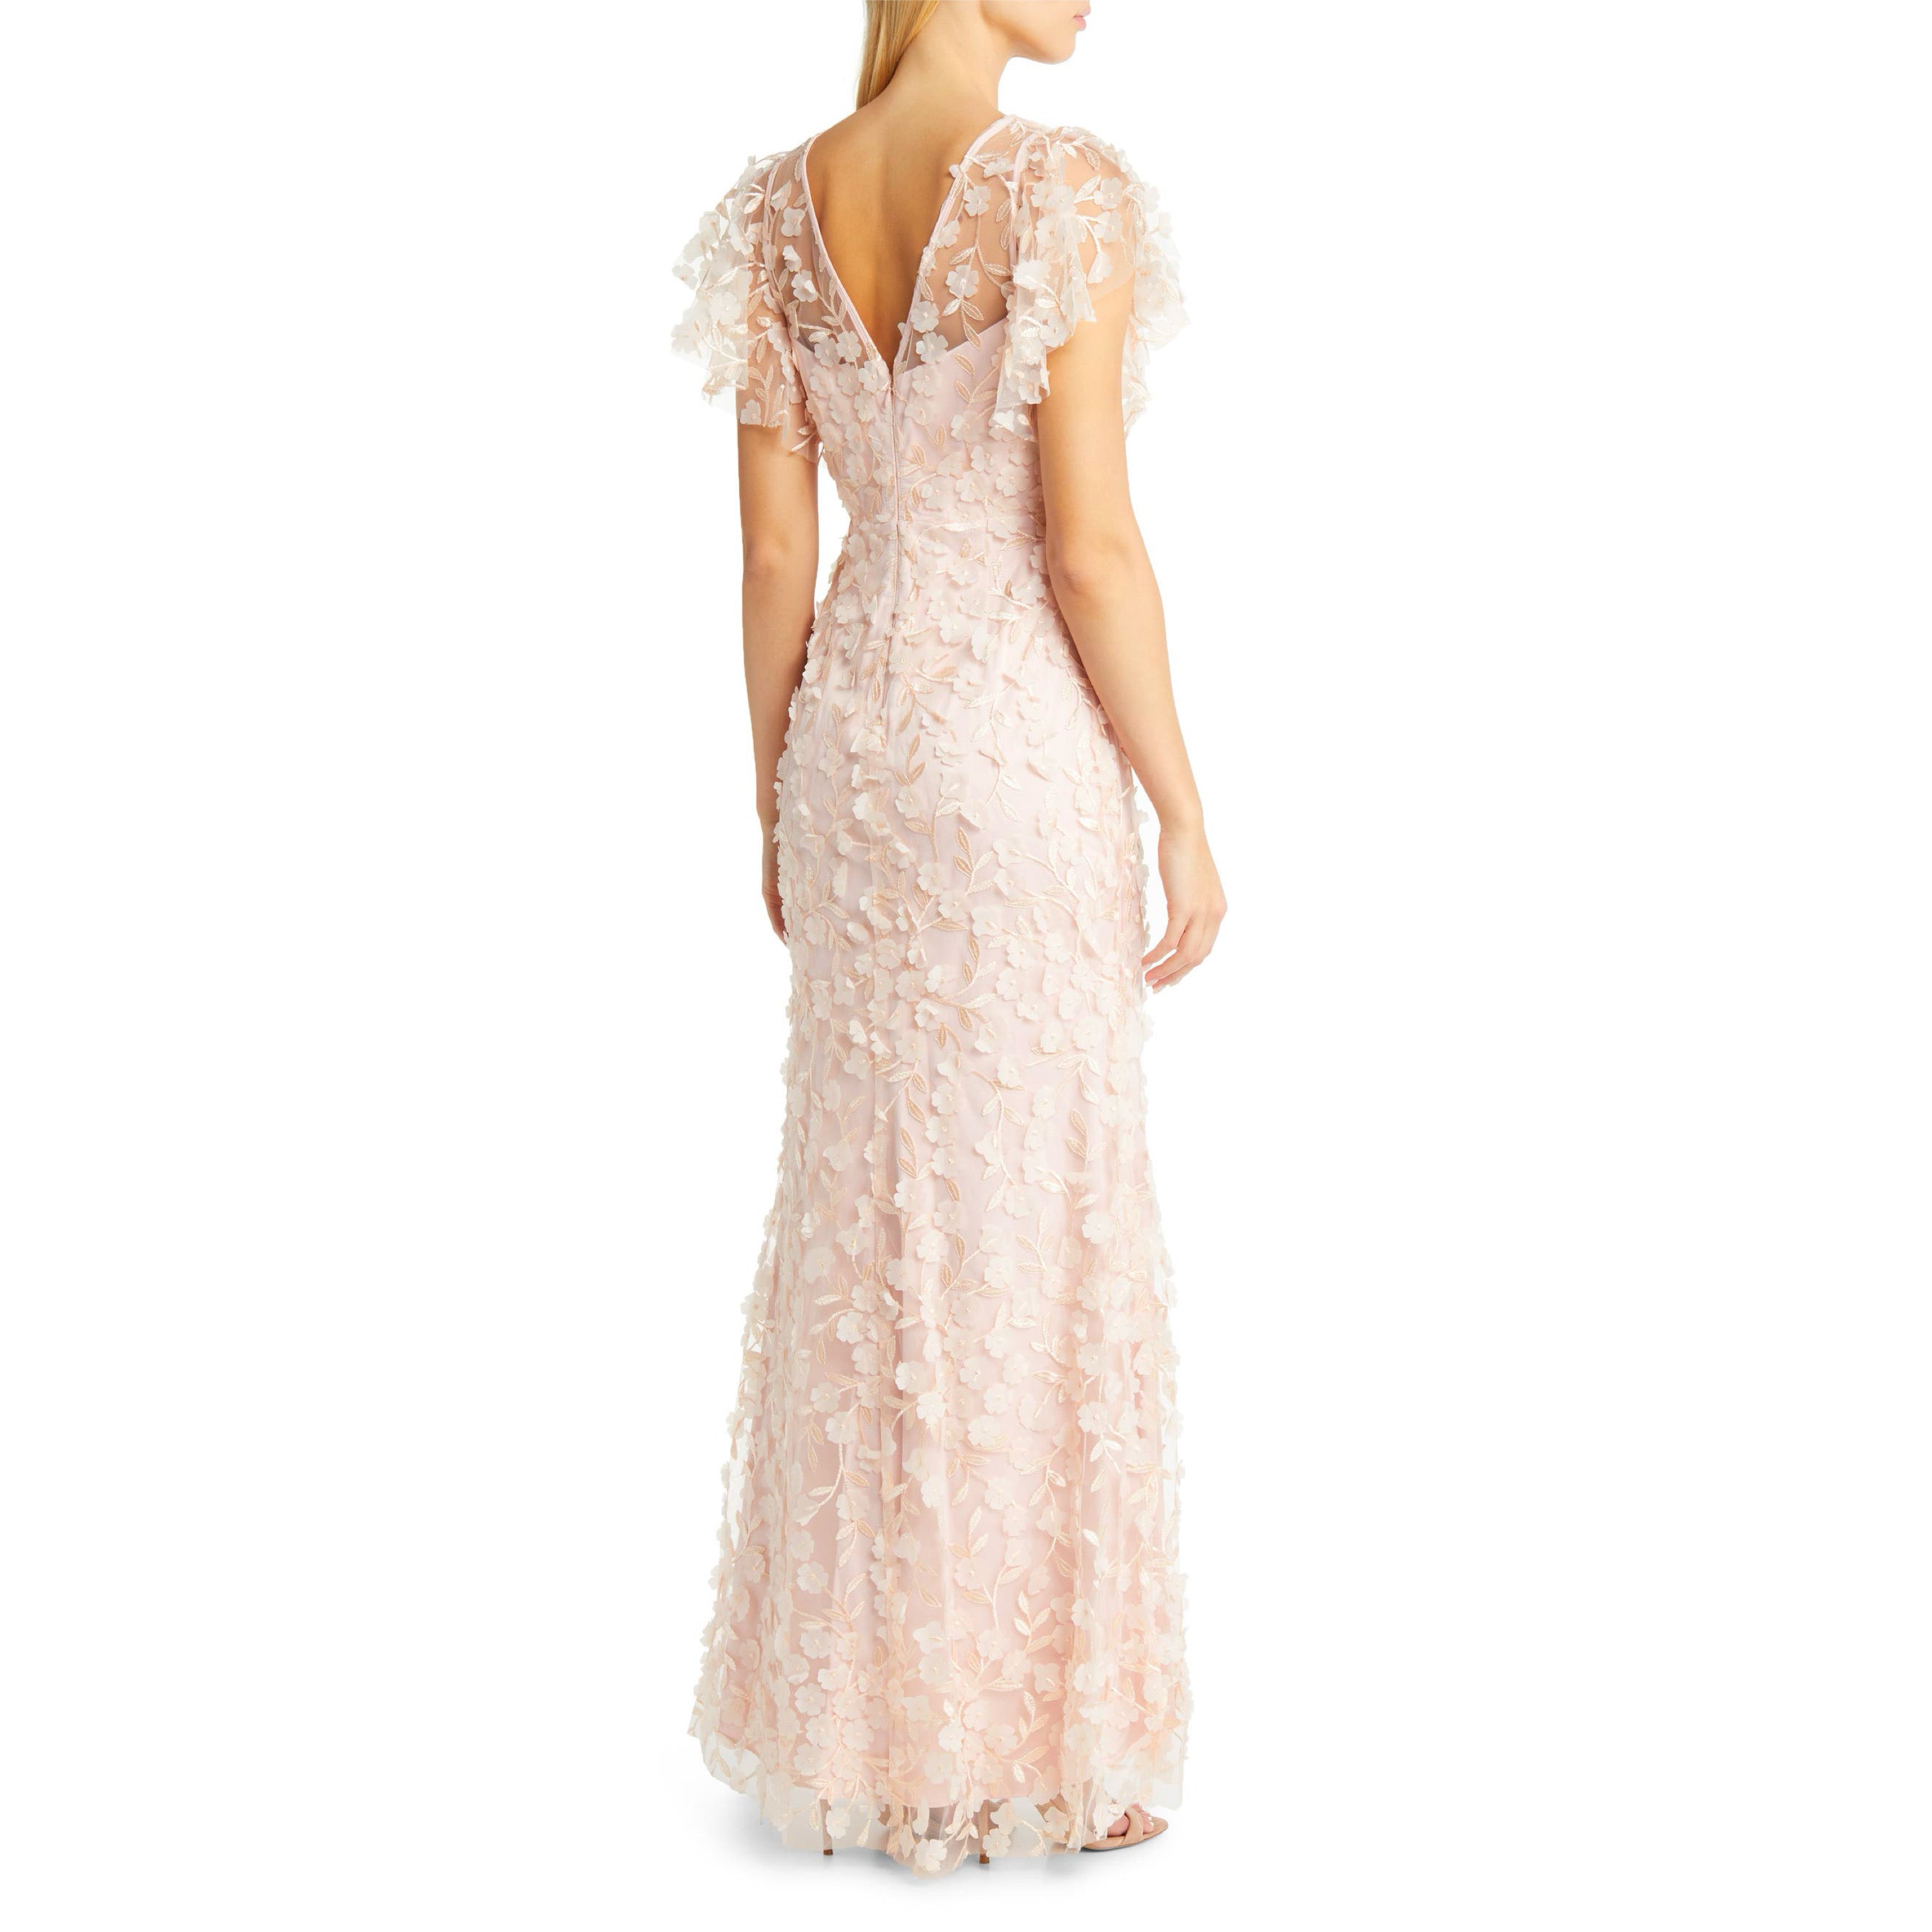 Eliza J. blush 3D floral dress, size 12